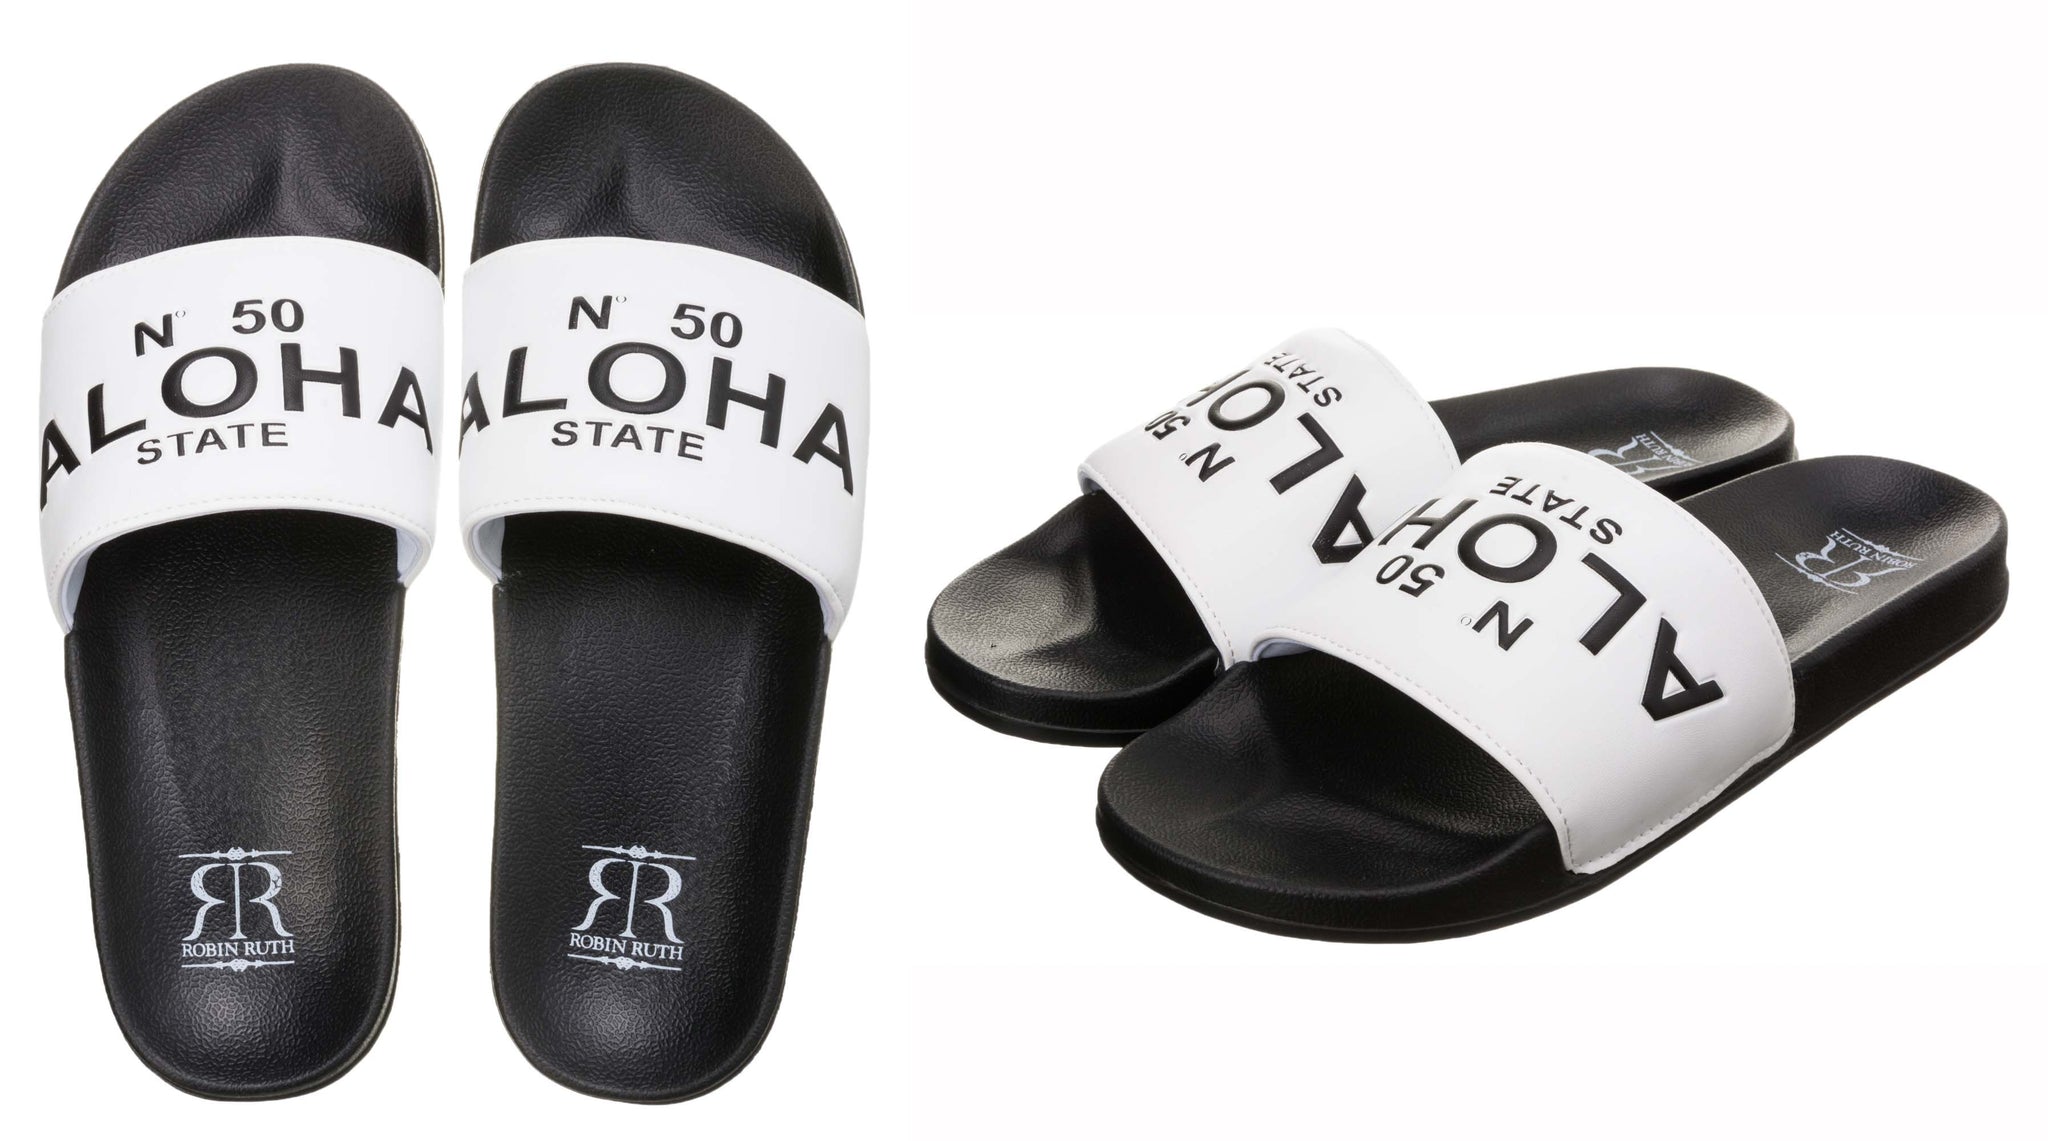 Slippah Slidahs: Level Up Yo' Collection: N 50 Aloha State Slides - Da Ultimate Footwear Souvenirs